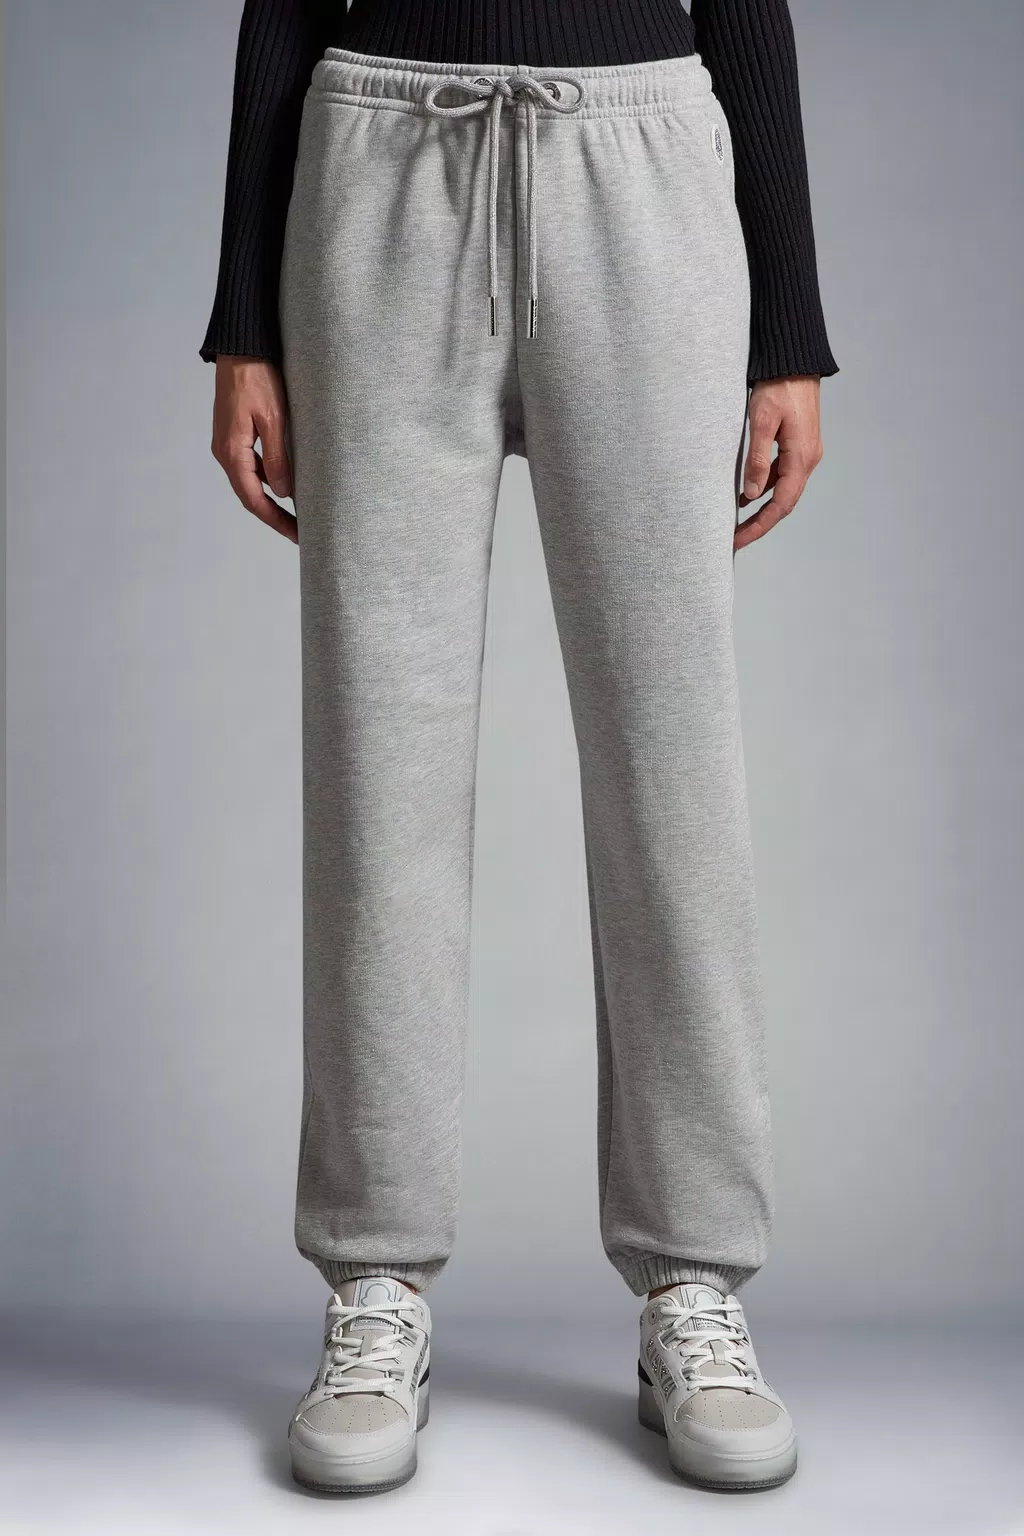 Pants for Women - Shorts, Leggings & Sweatpants | Moncler US